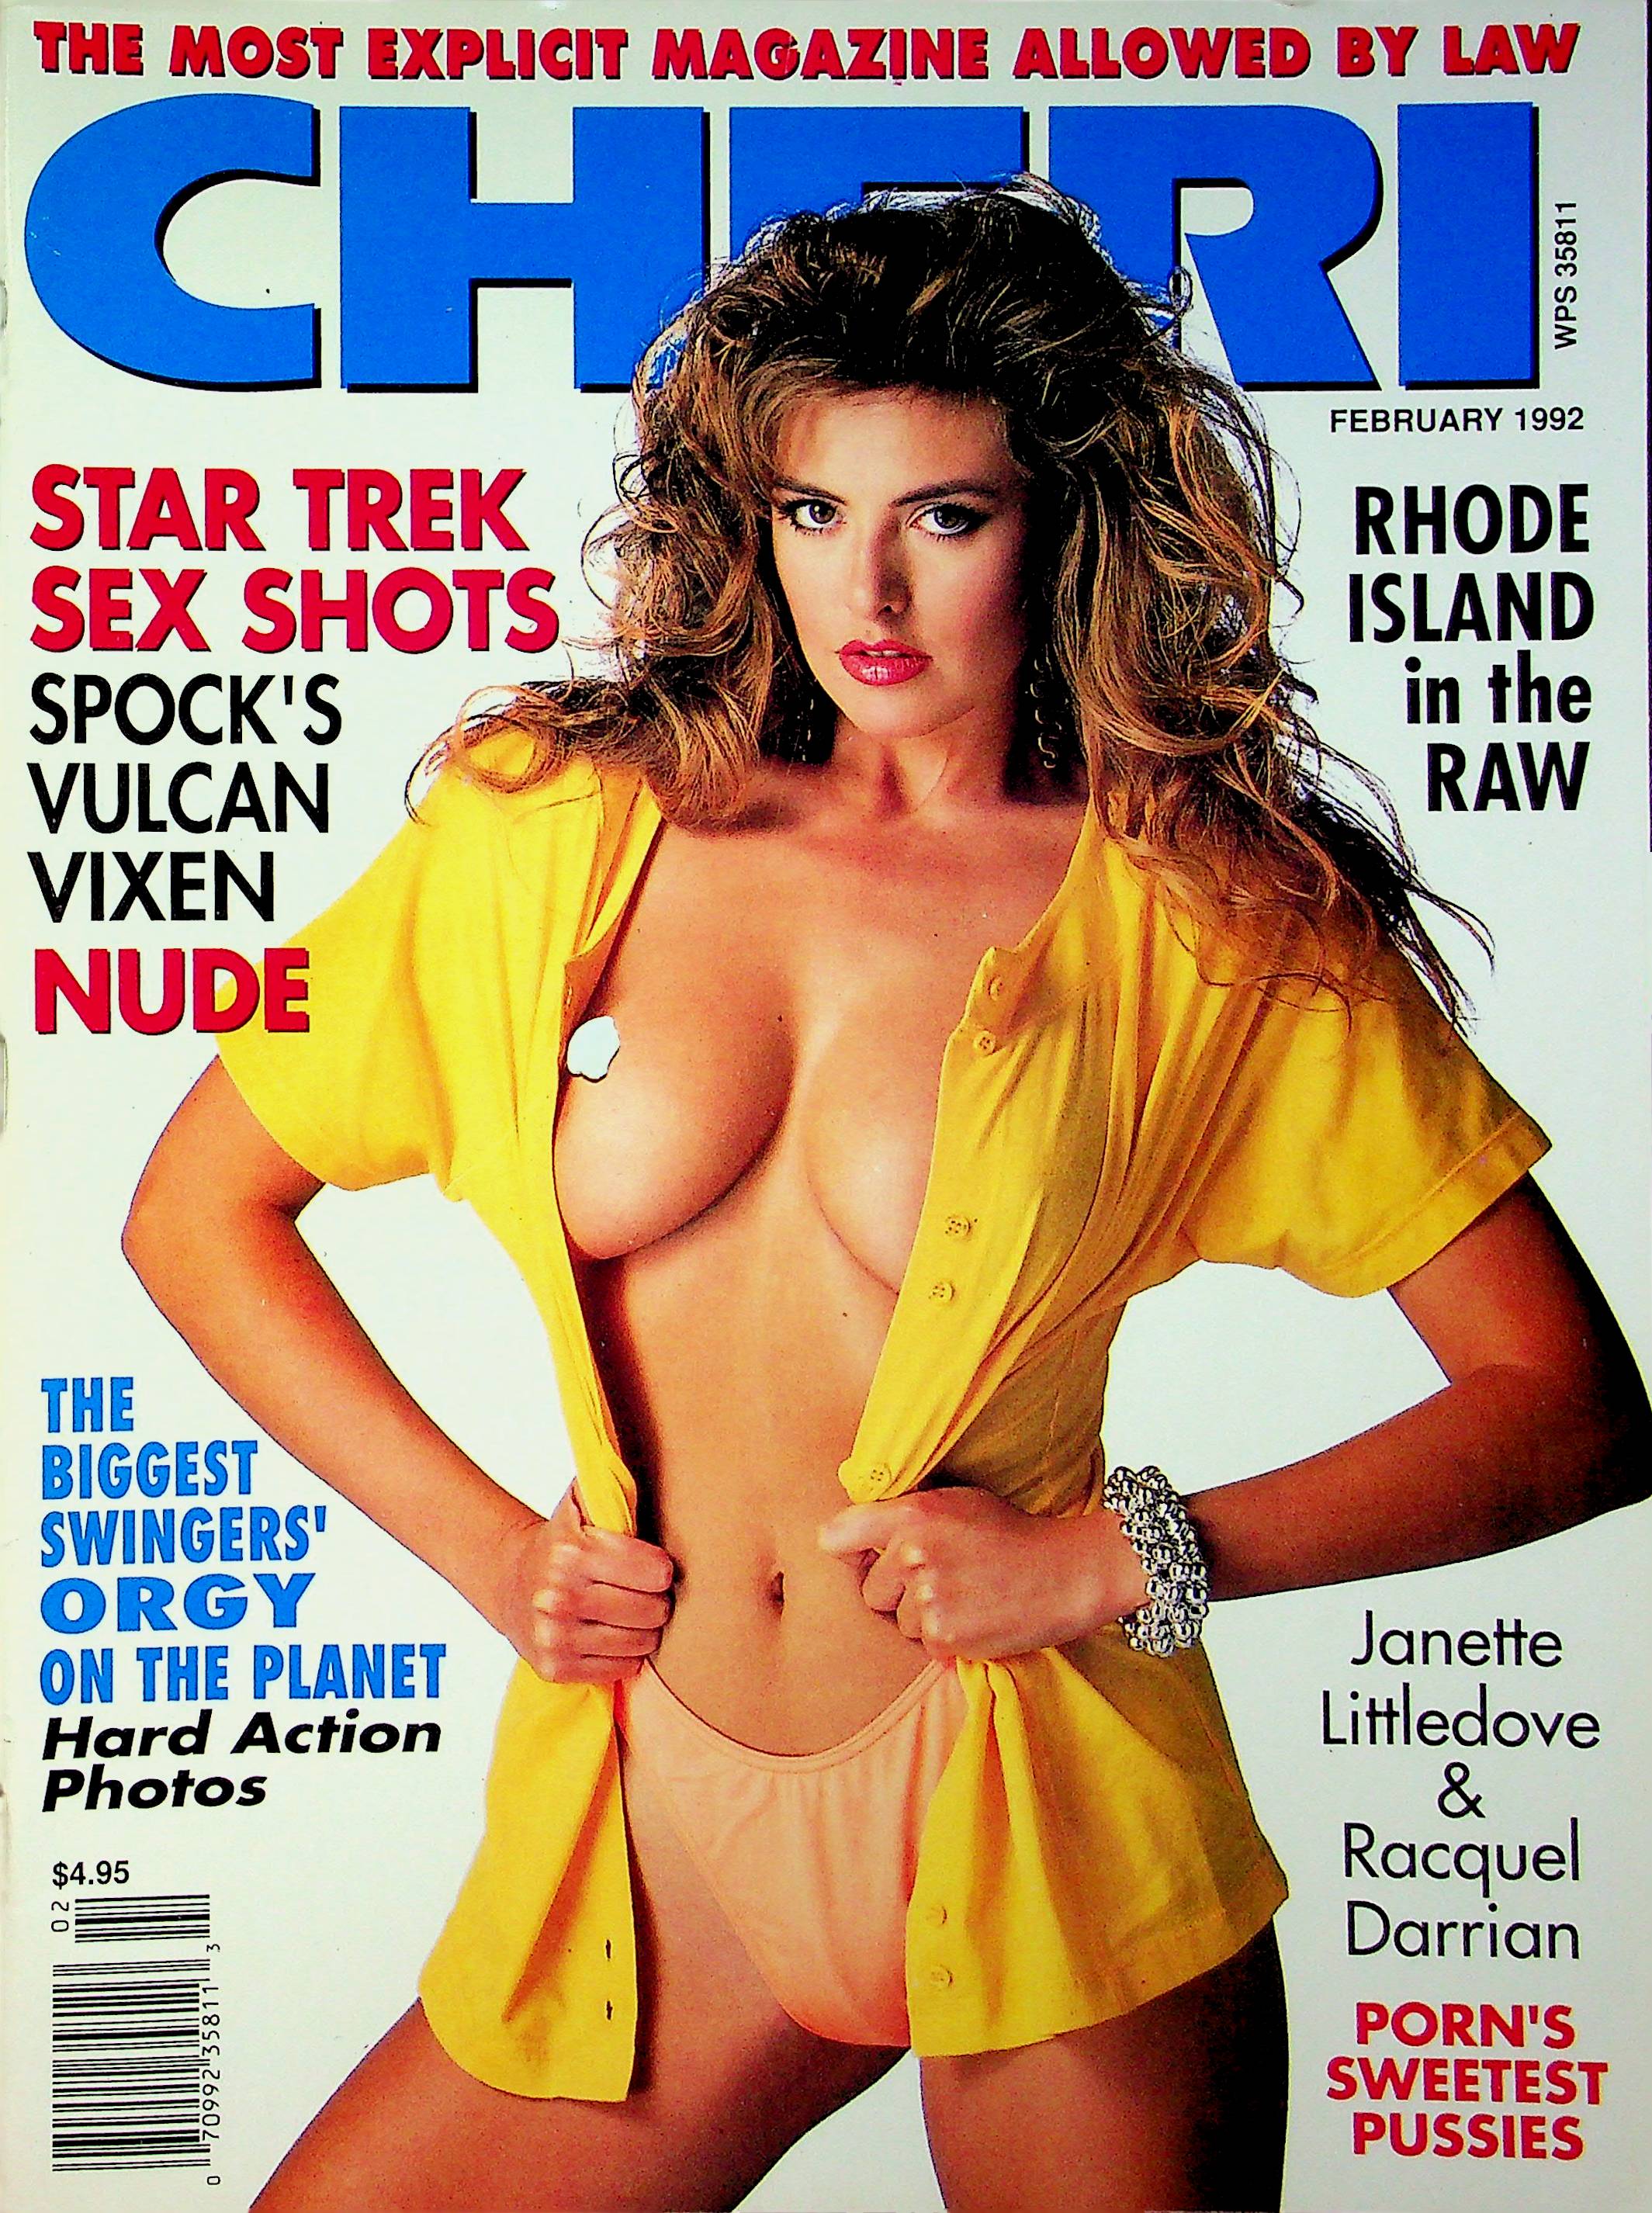 Cheri Magazine Rhode Island and Janette Littledove February 1992 073123R